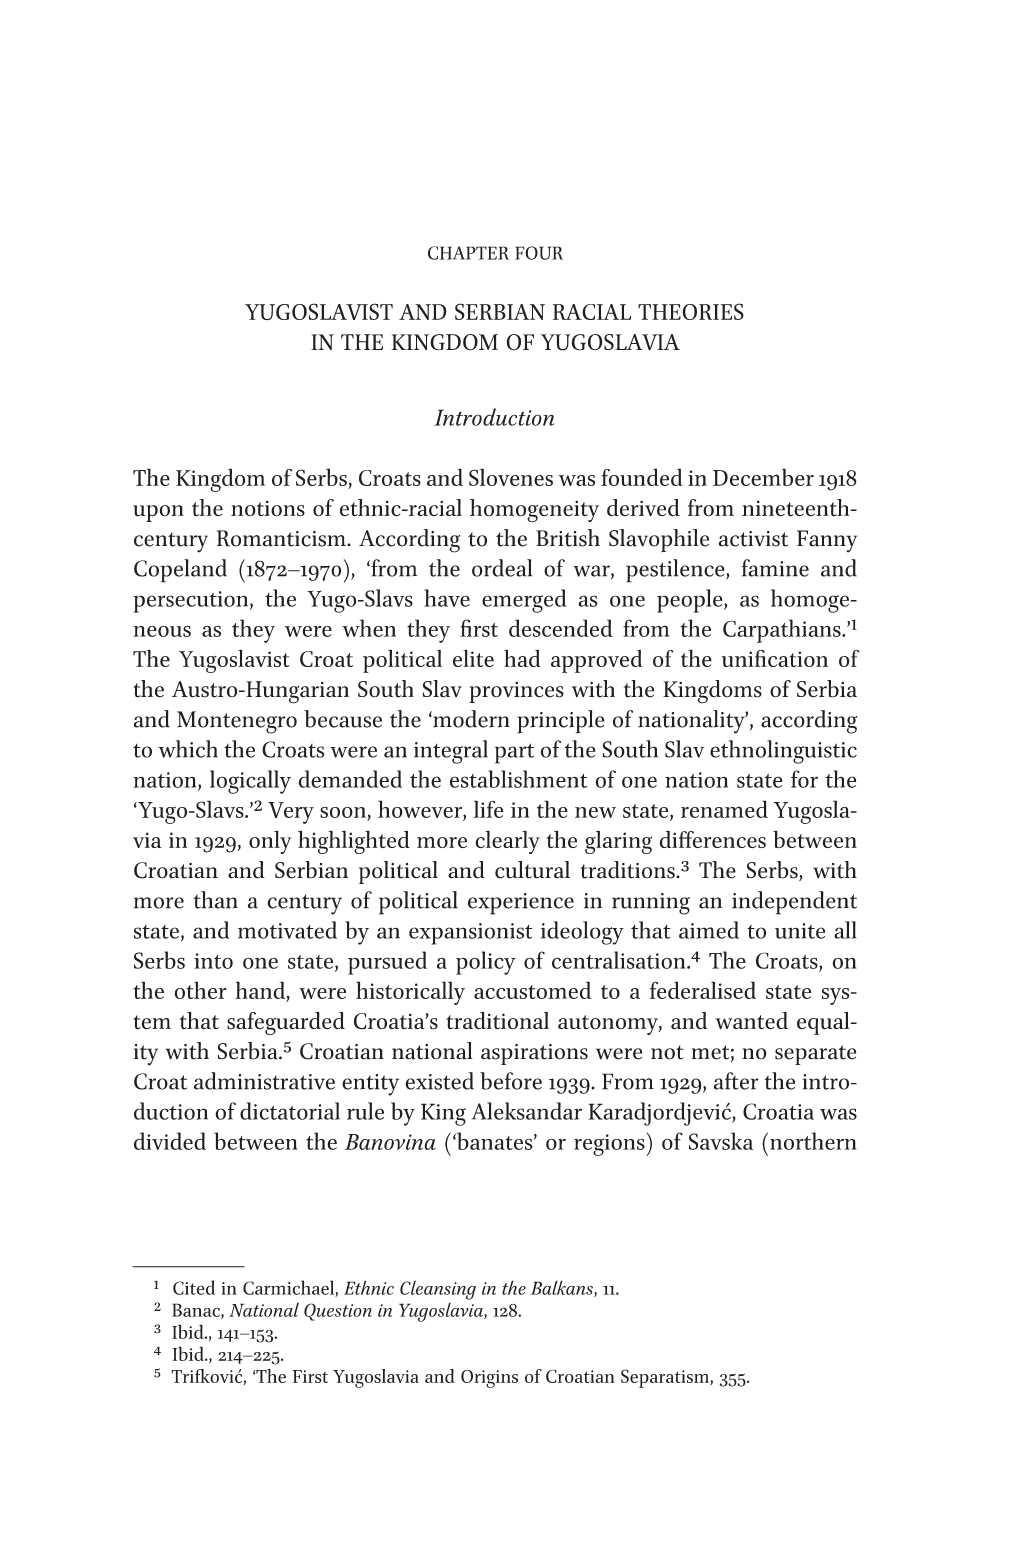 Yugoslavist and Serbian Racial Theories in the Kingdom of Yugoslavia